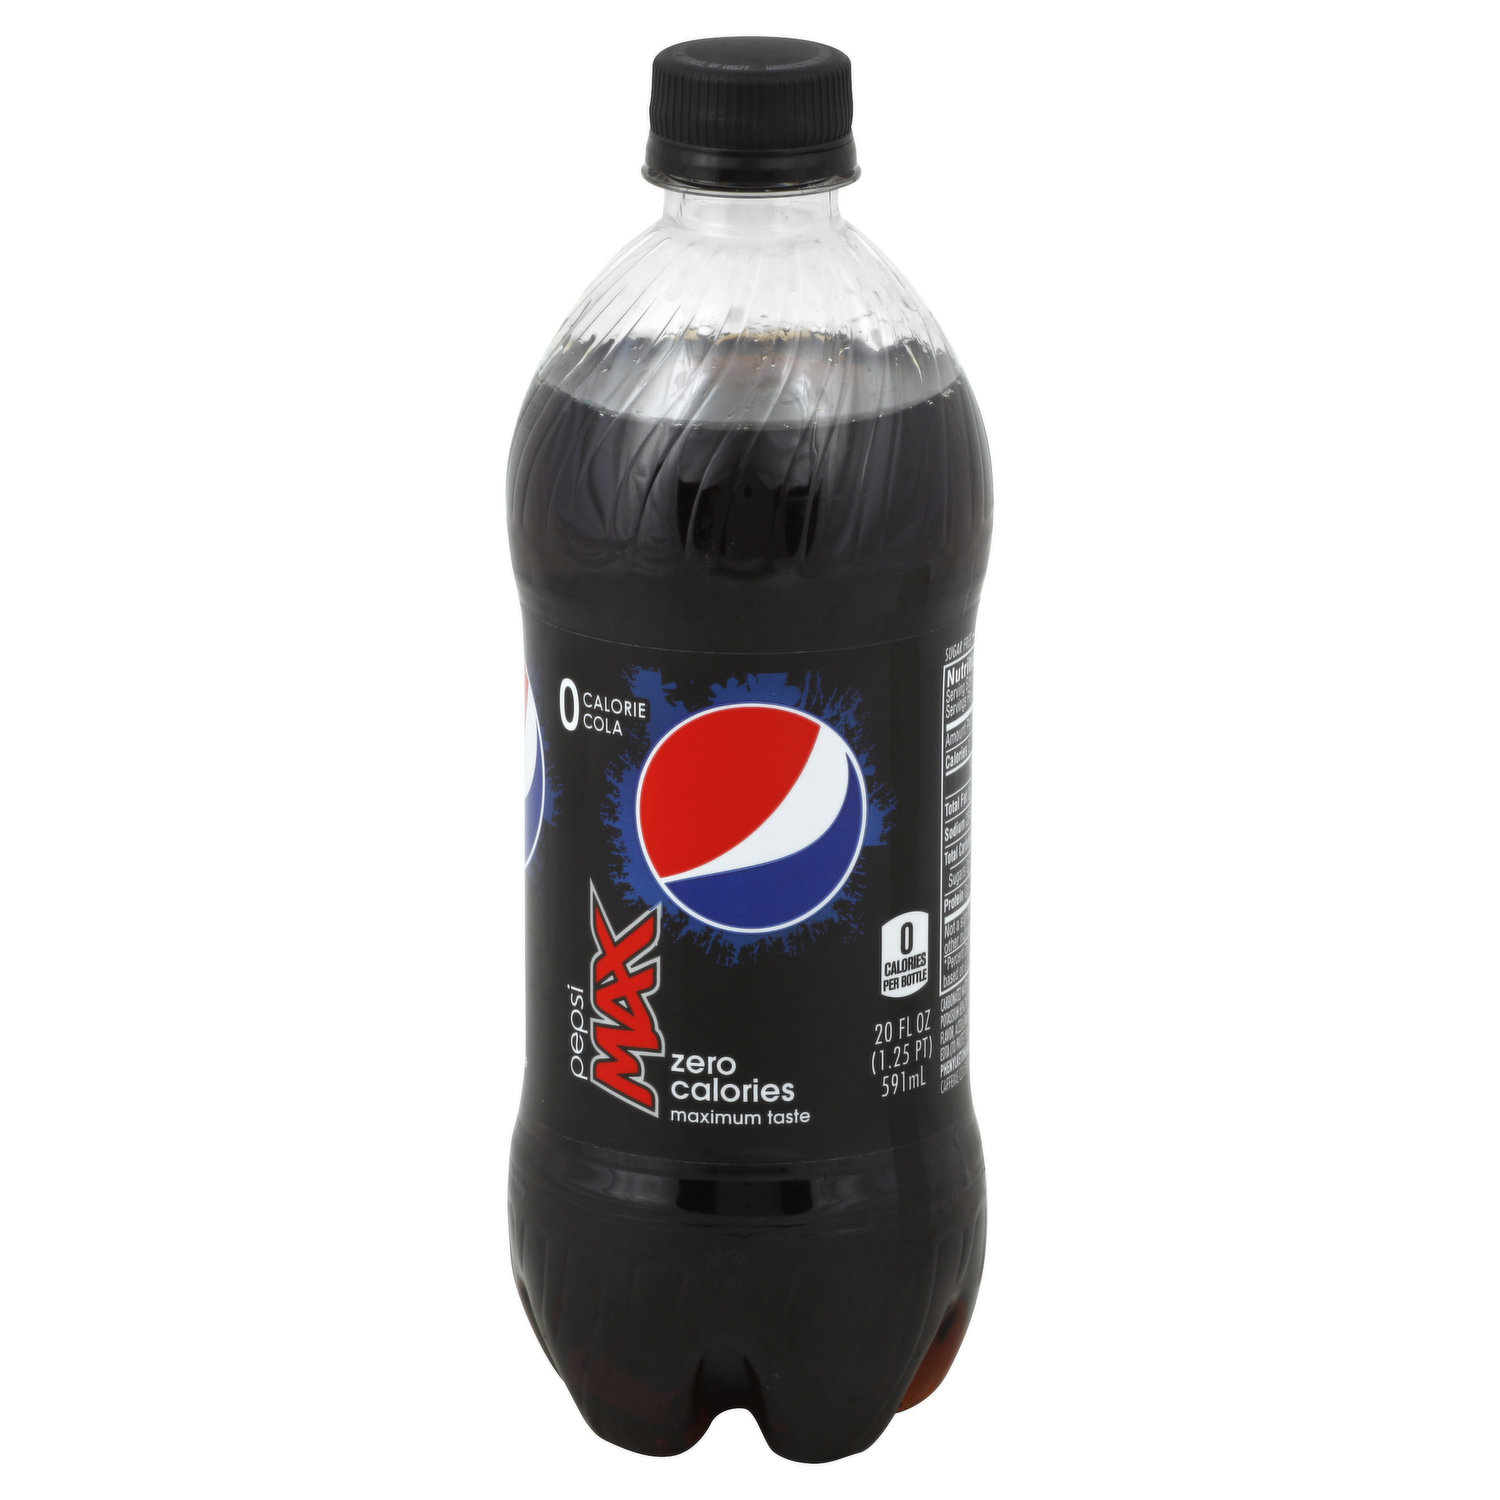 Pepsi Cola 20 oz.